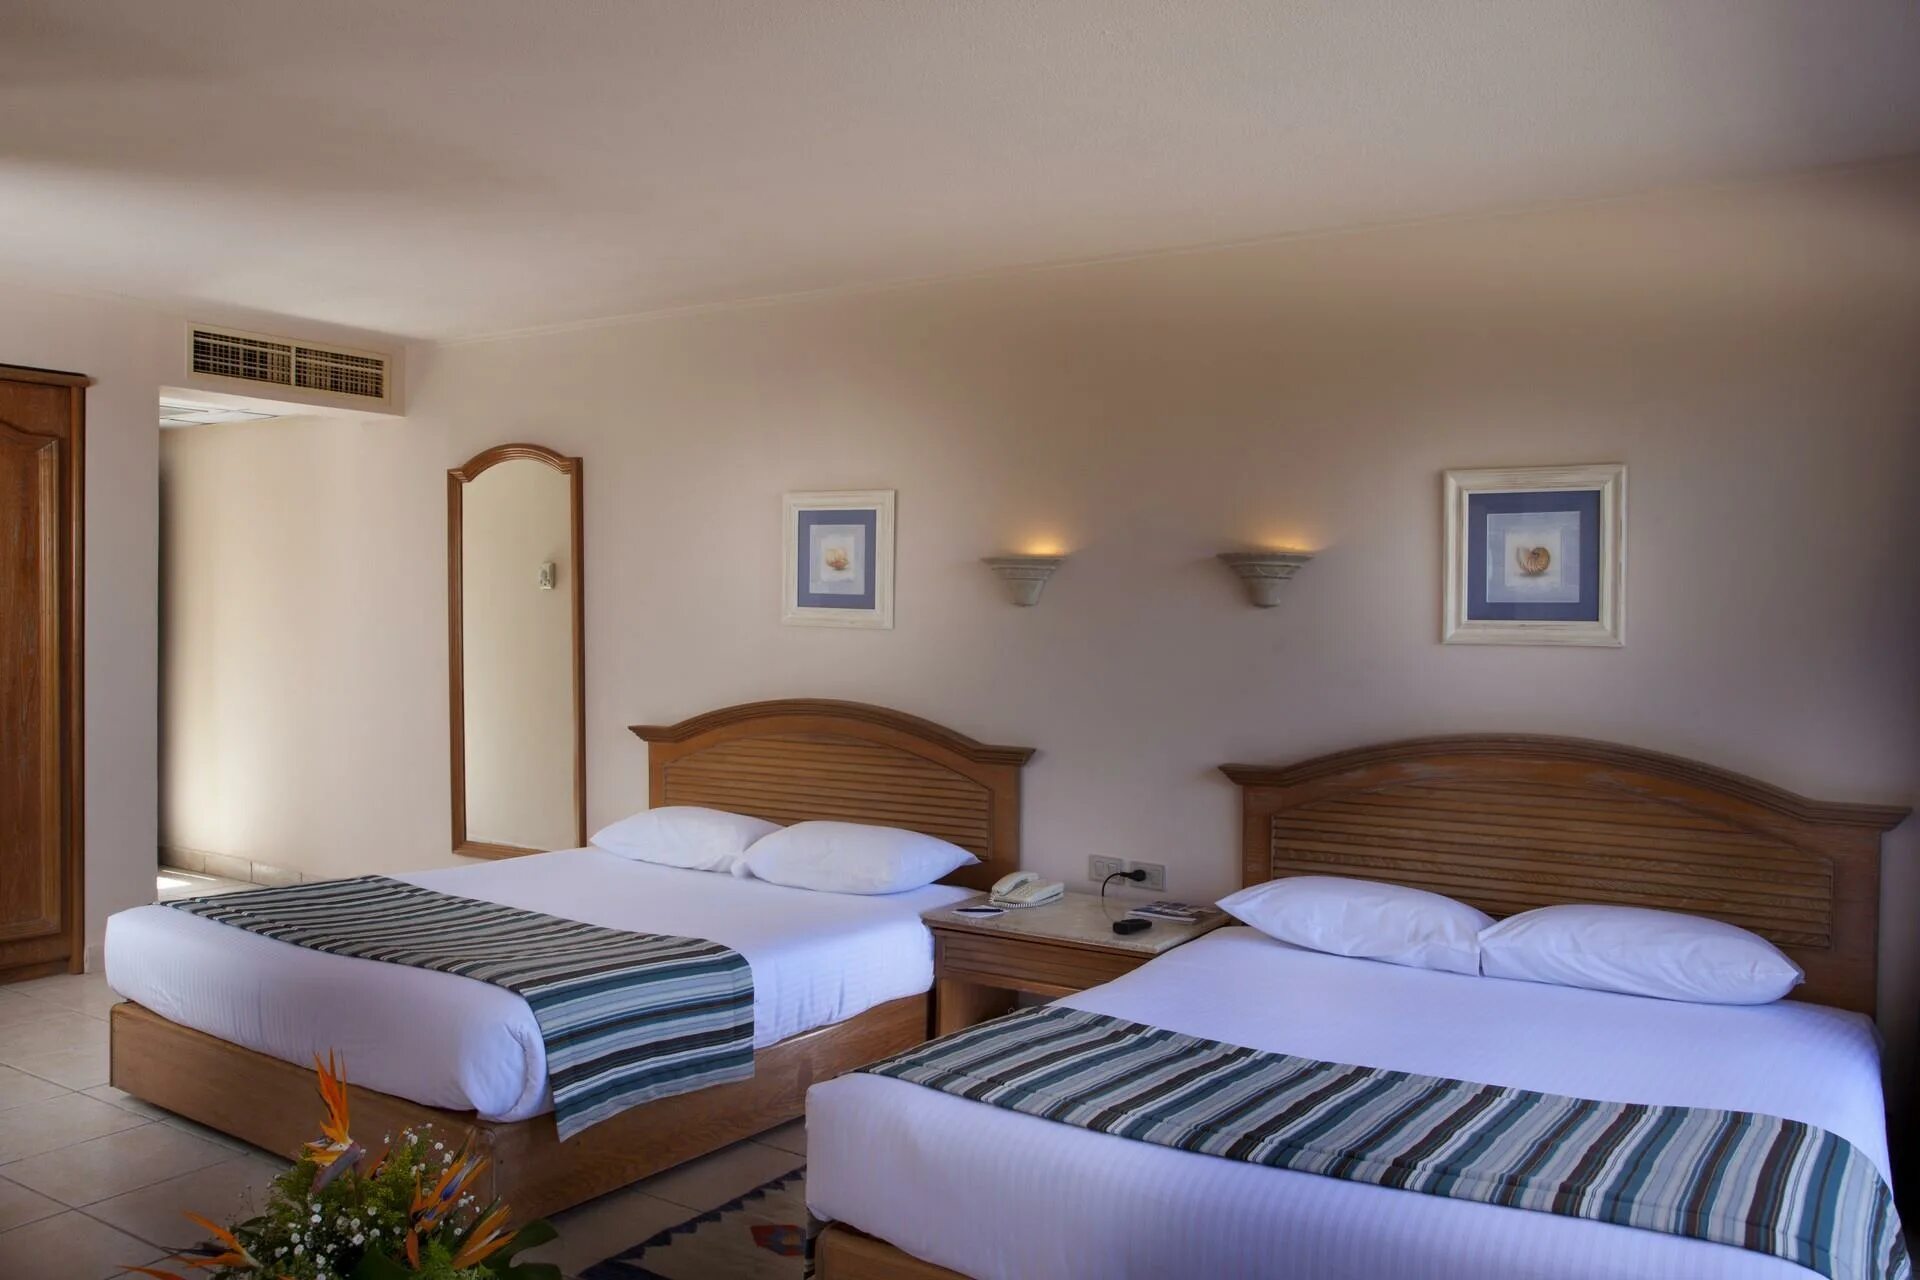 Coral beach 4 хургада. Отель Coral Beach Hotel Hurghada. Корал Бич Хургада. Coral Beach Hotel Hurghada 4. Египет Хургада отель Корал Бич Резорт 4 звезды.